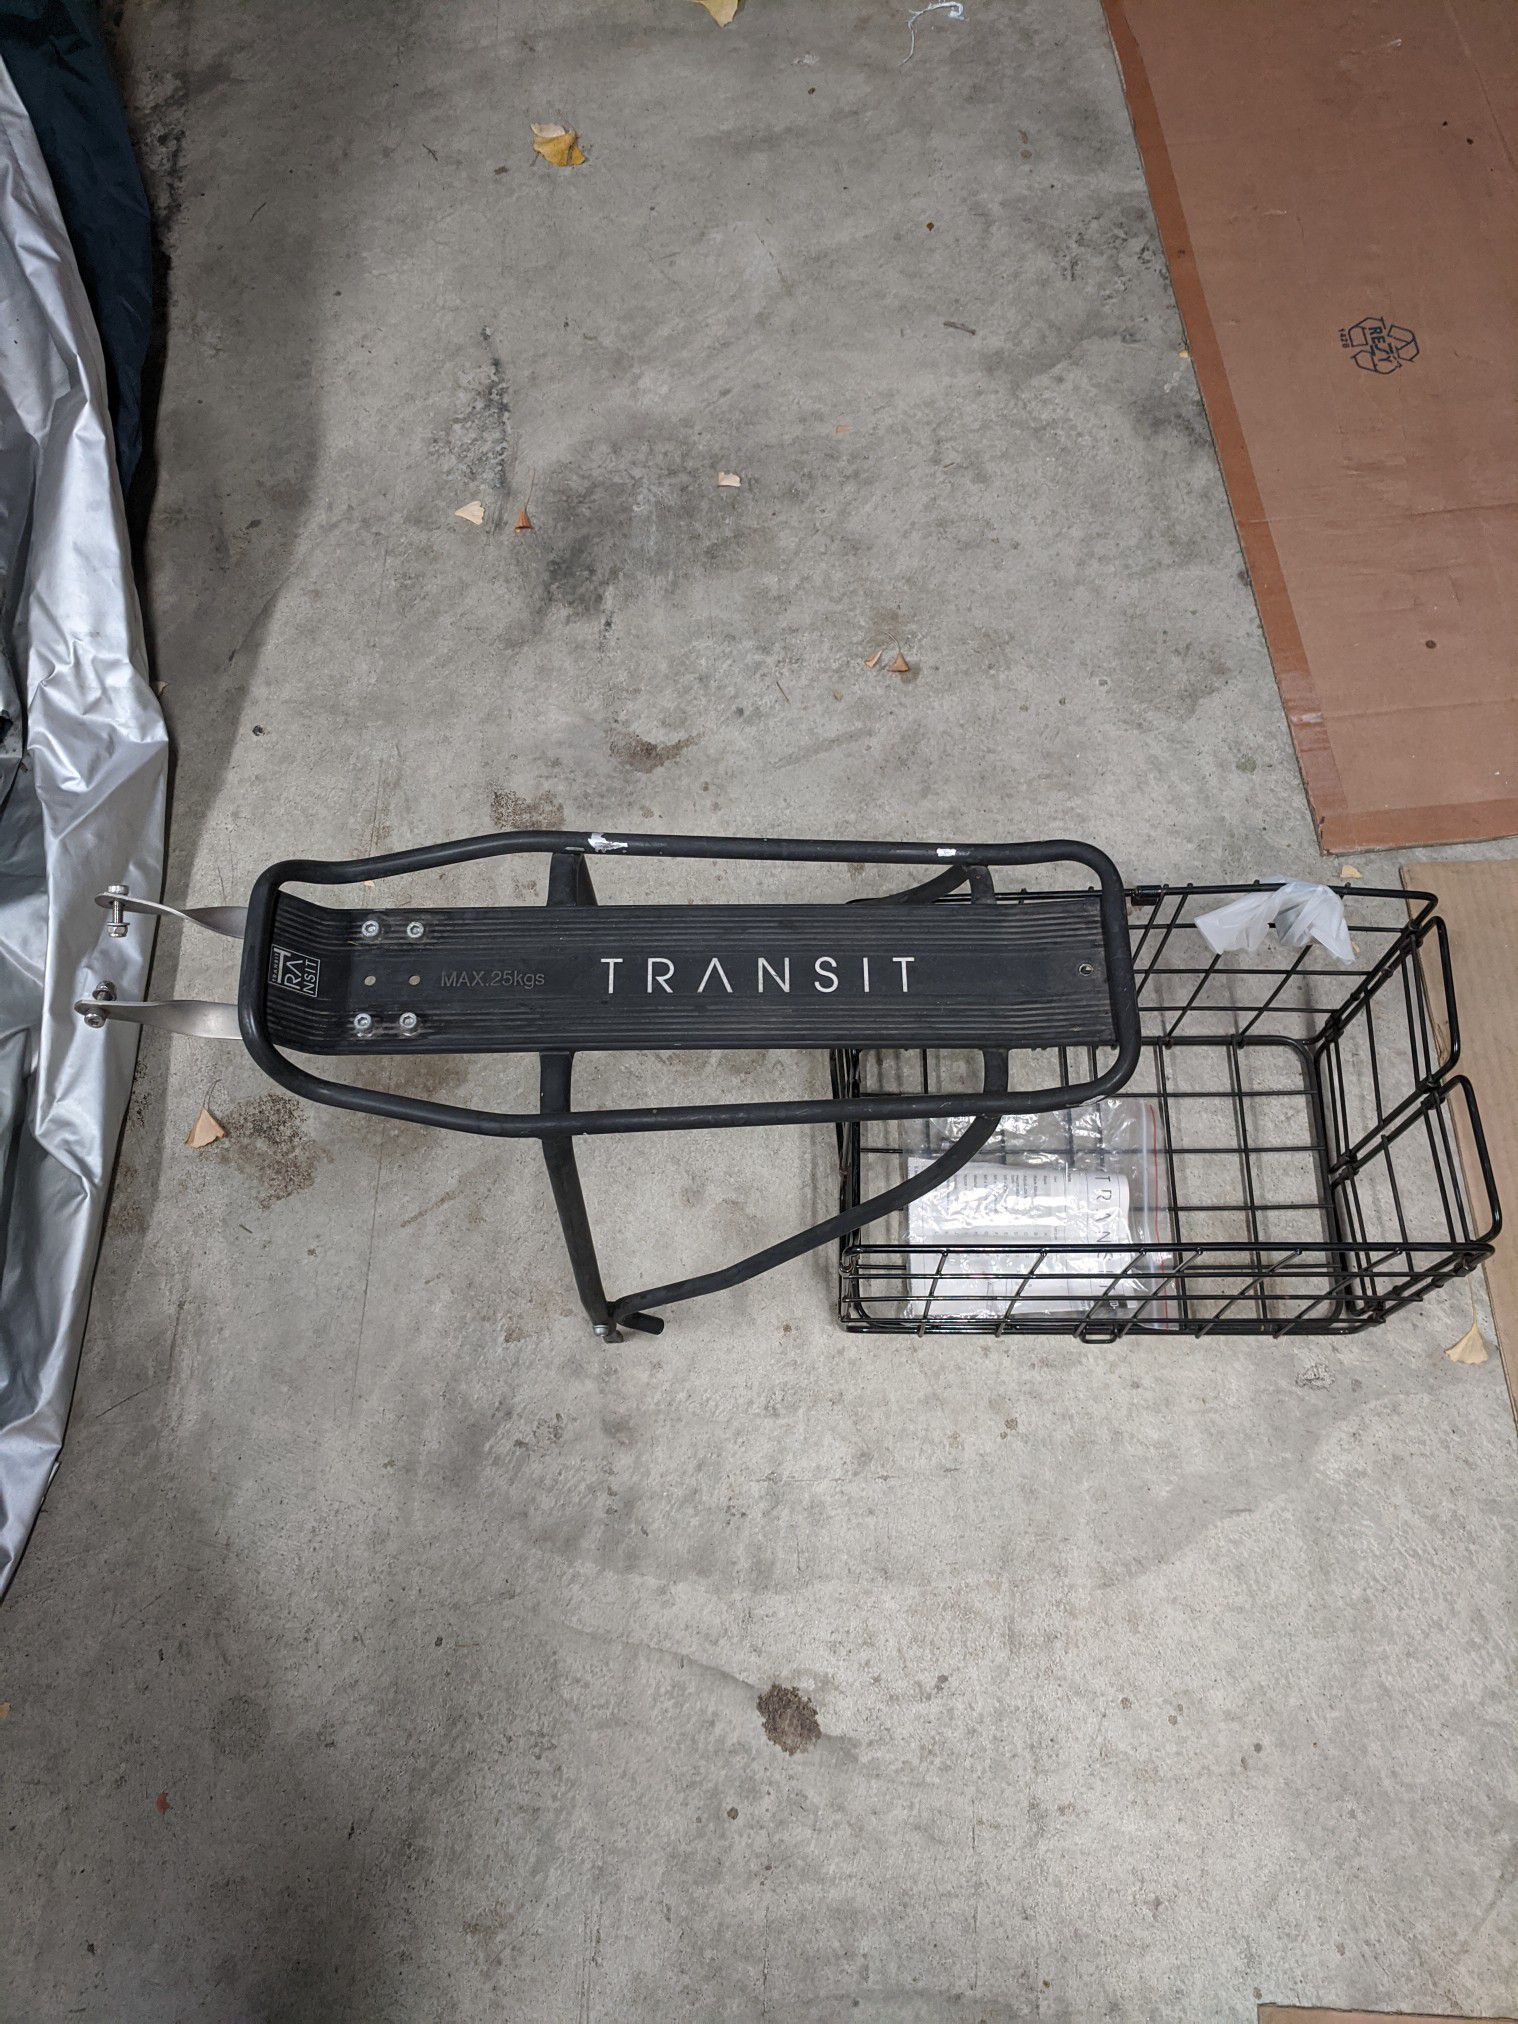 Transit bike rack and folding bike basket